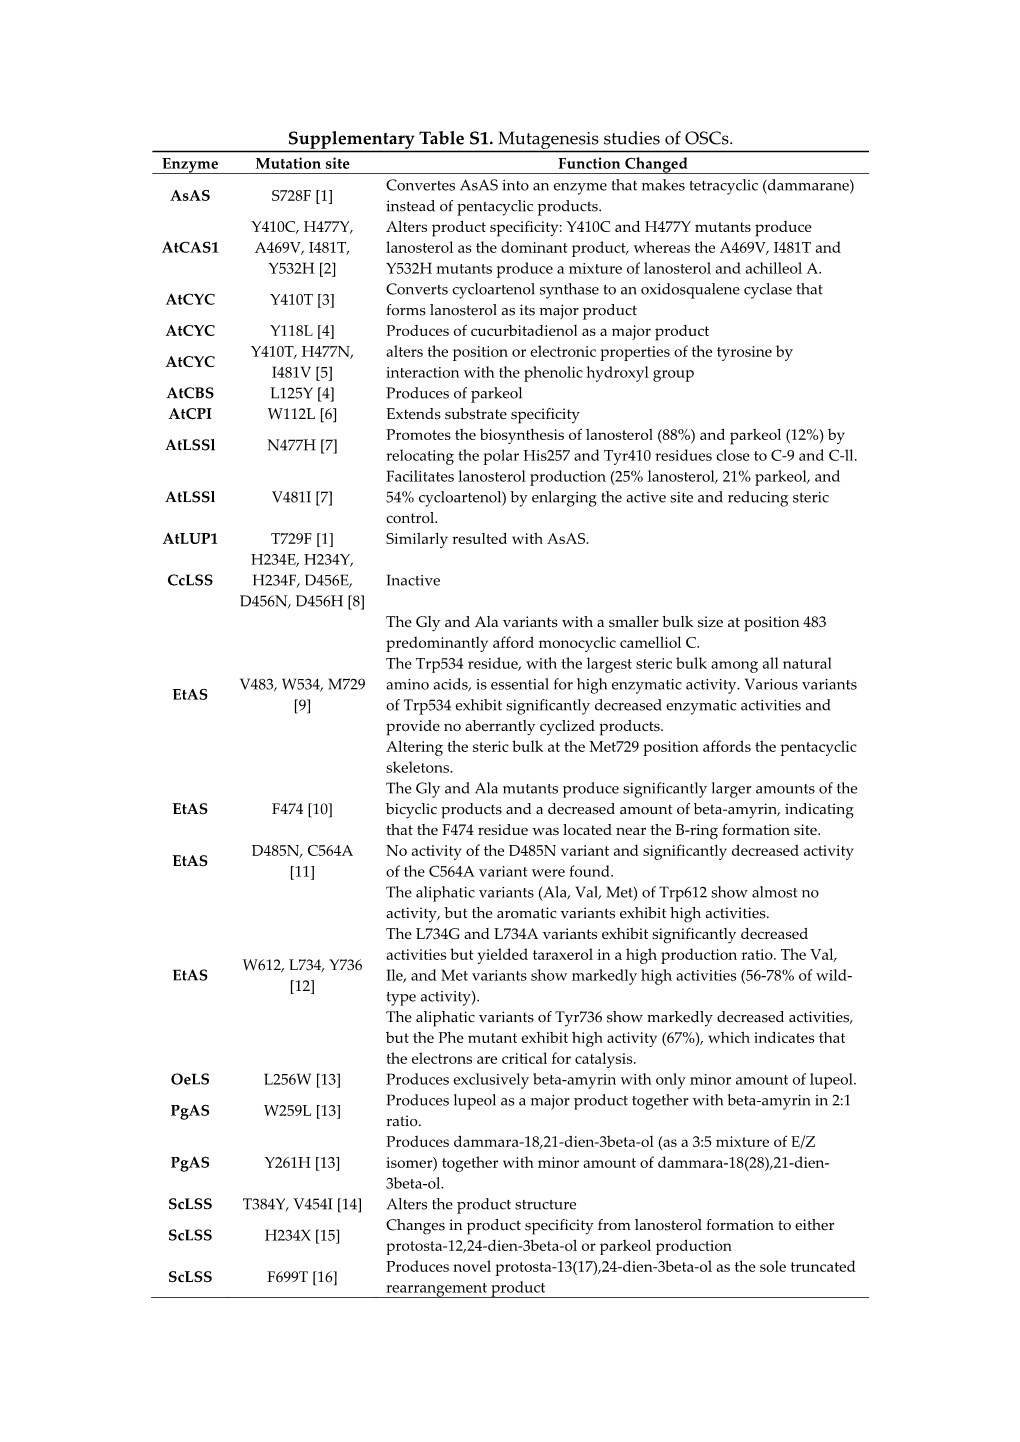 Supplementary Table S1. Mutagenesis Studies of Oscs